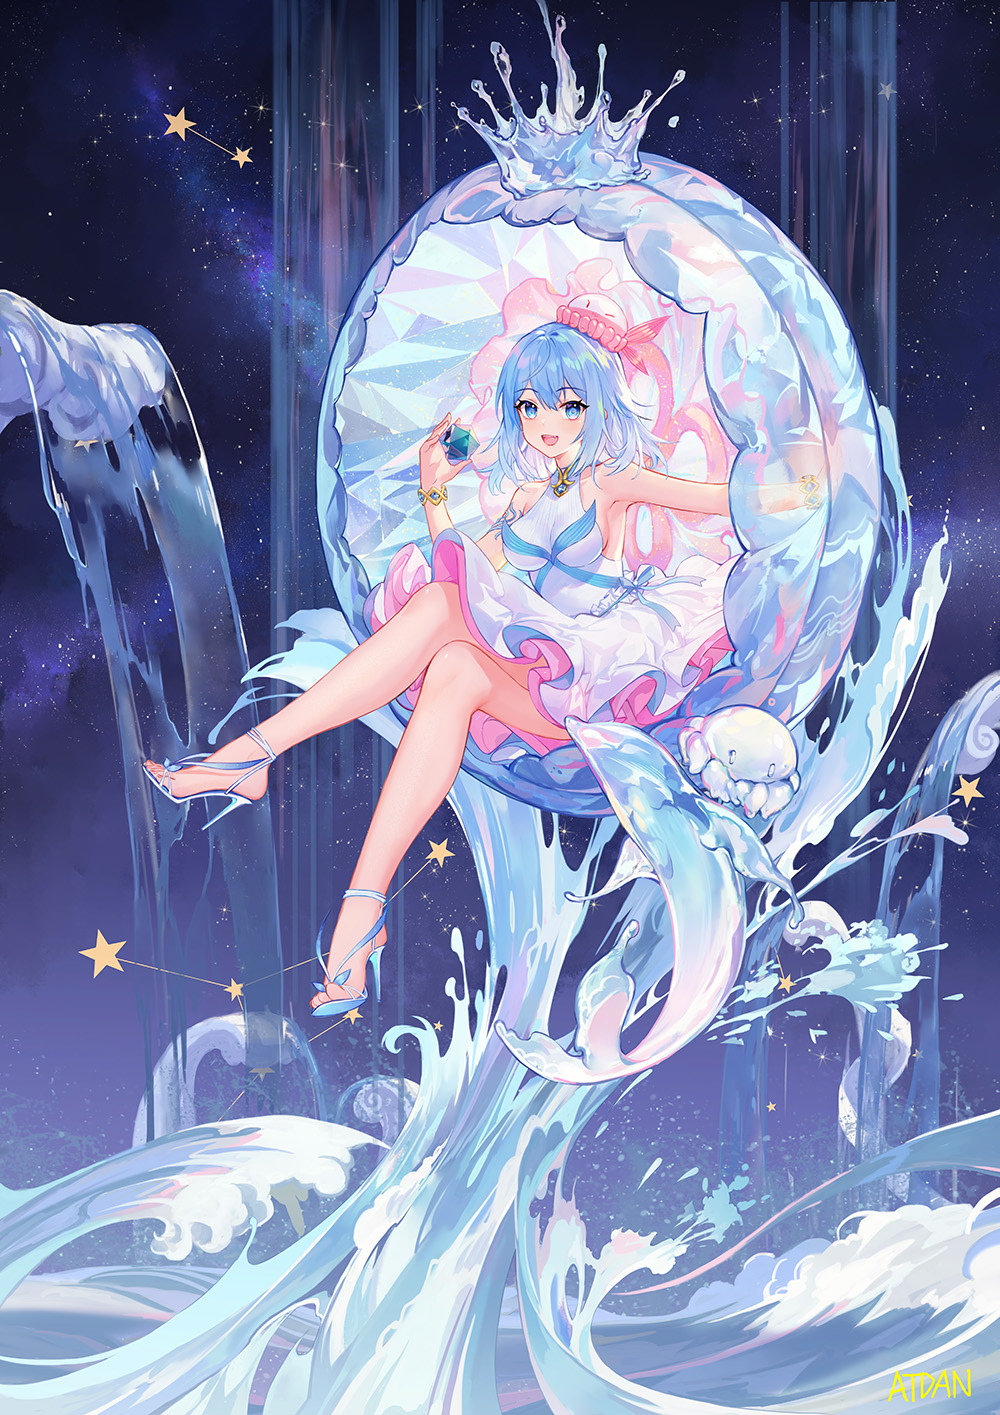 Anime 1000x1415 anime anime girls digital art artwork portrait display water open mouth space blue hair blue eyes dress blue dress hat legs Atdan heels high heels